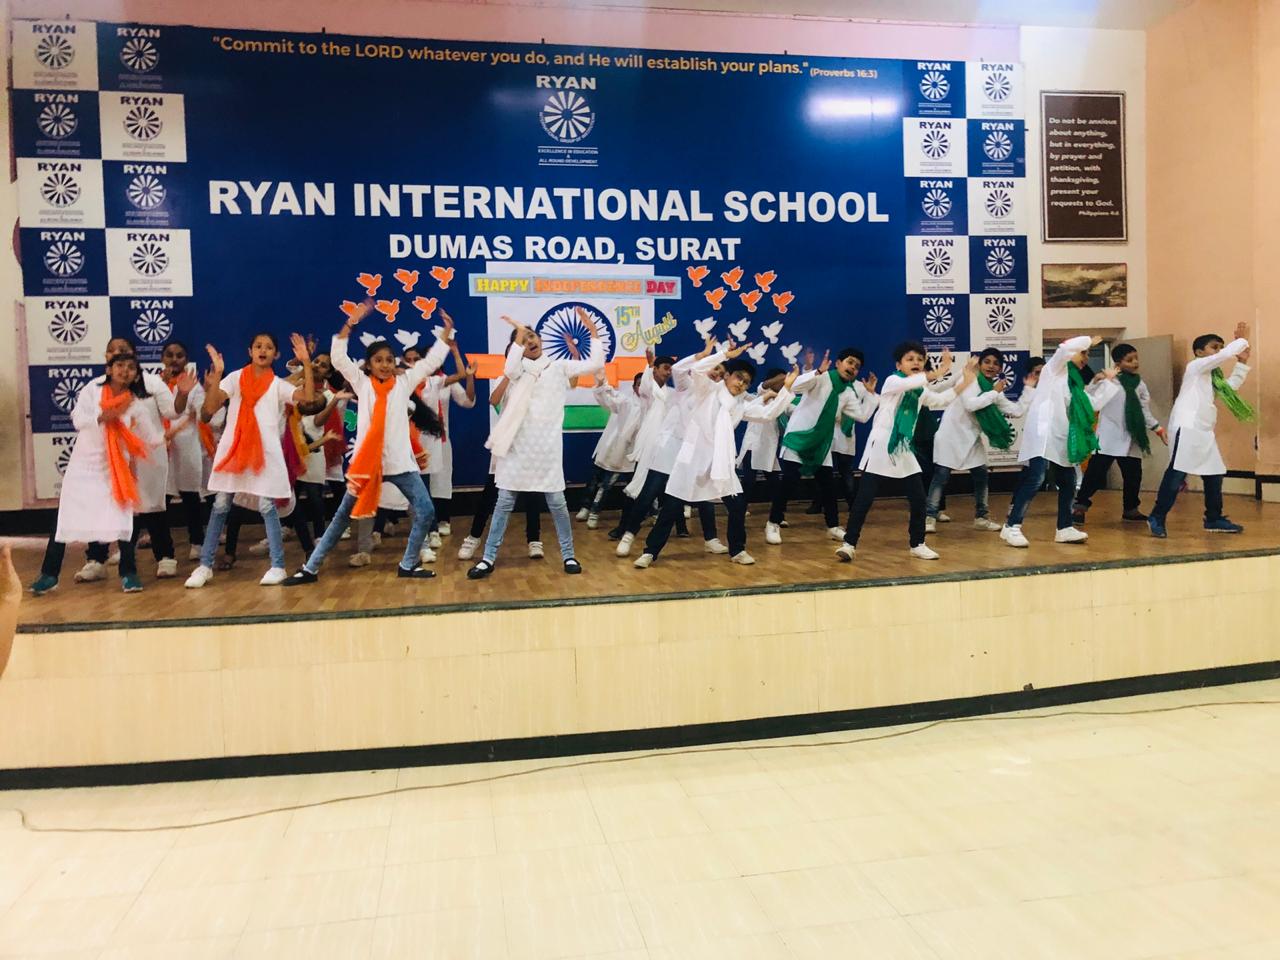 Republic Day - Ryan International School, Dumas